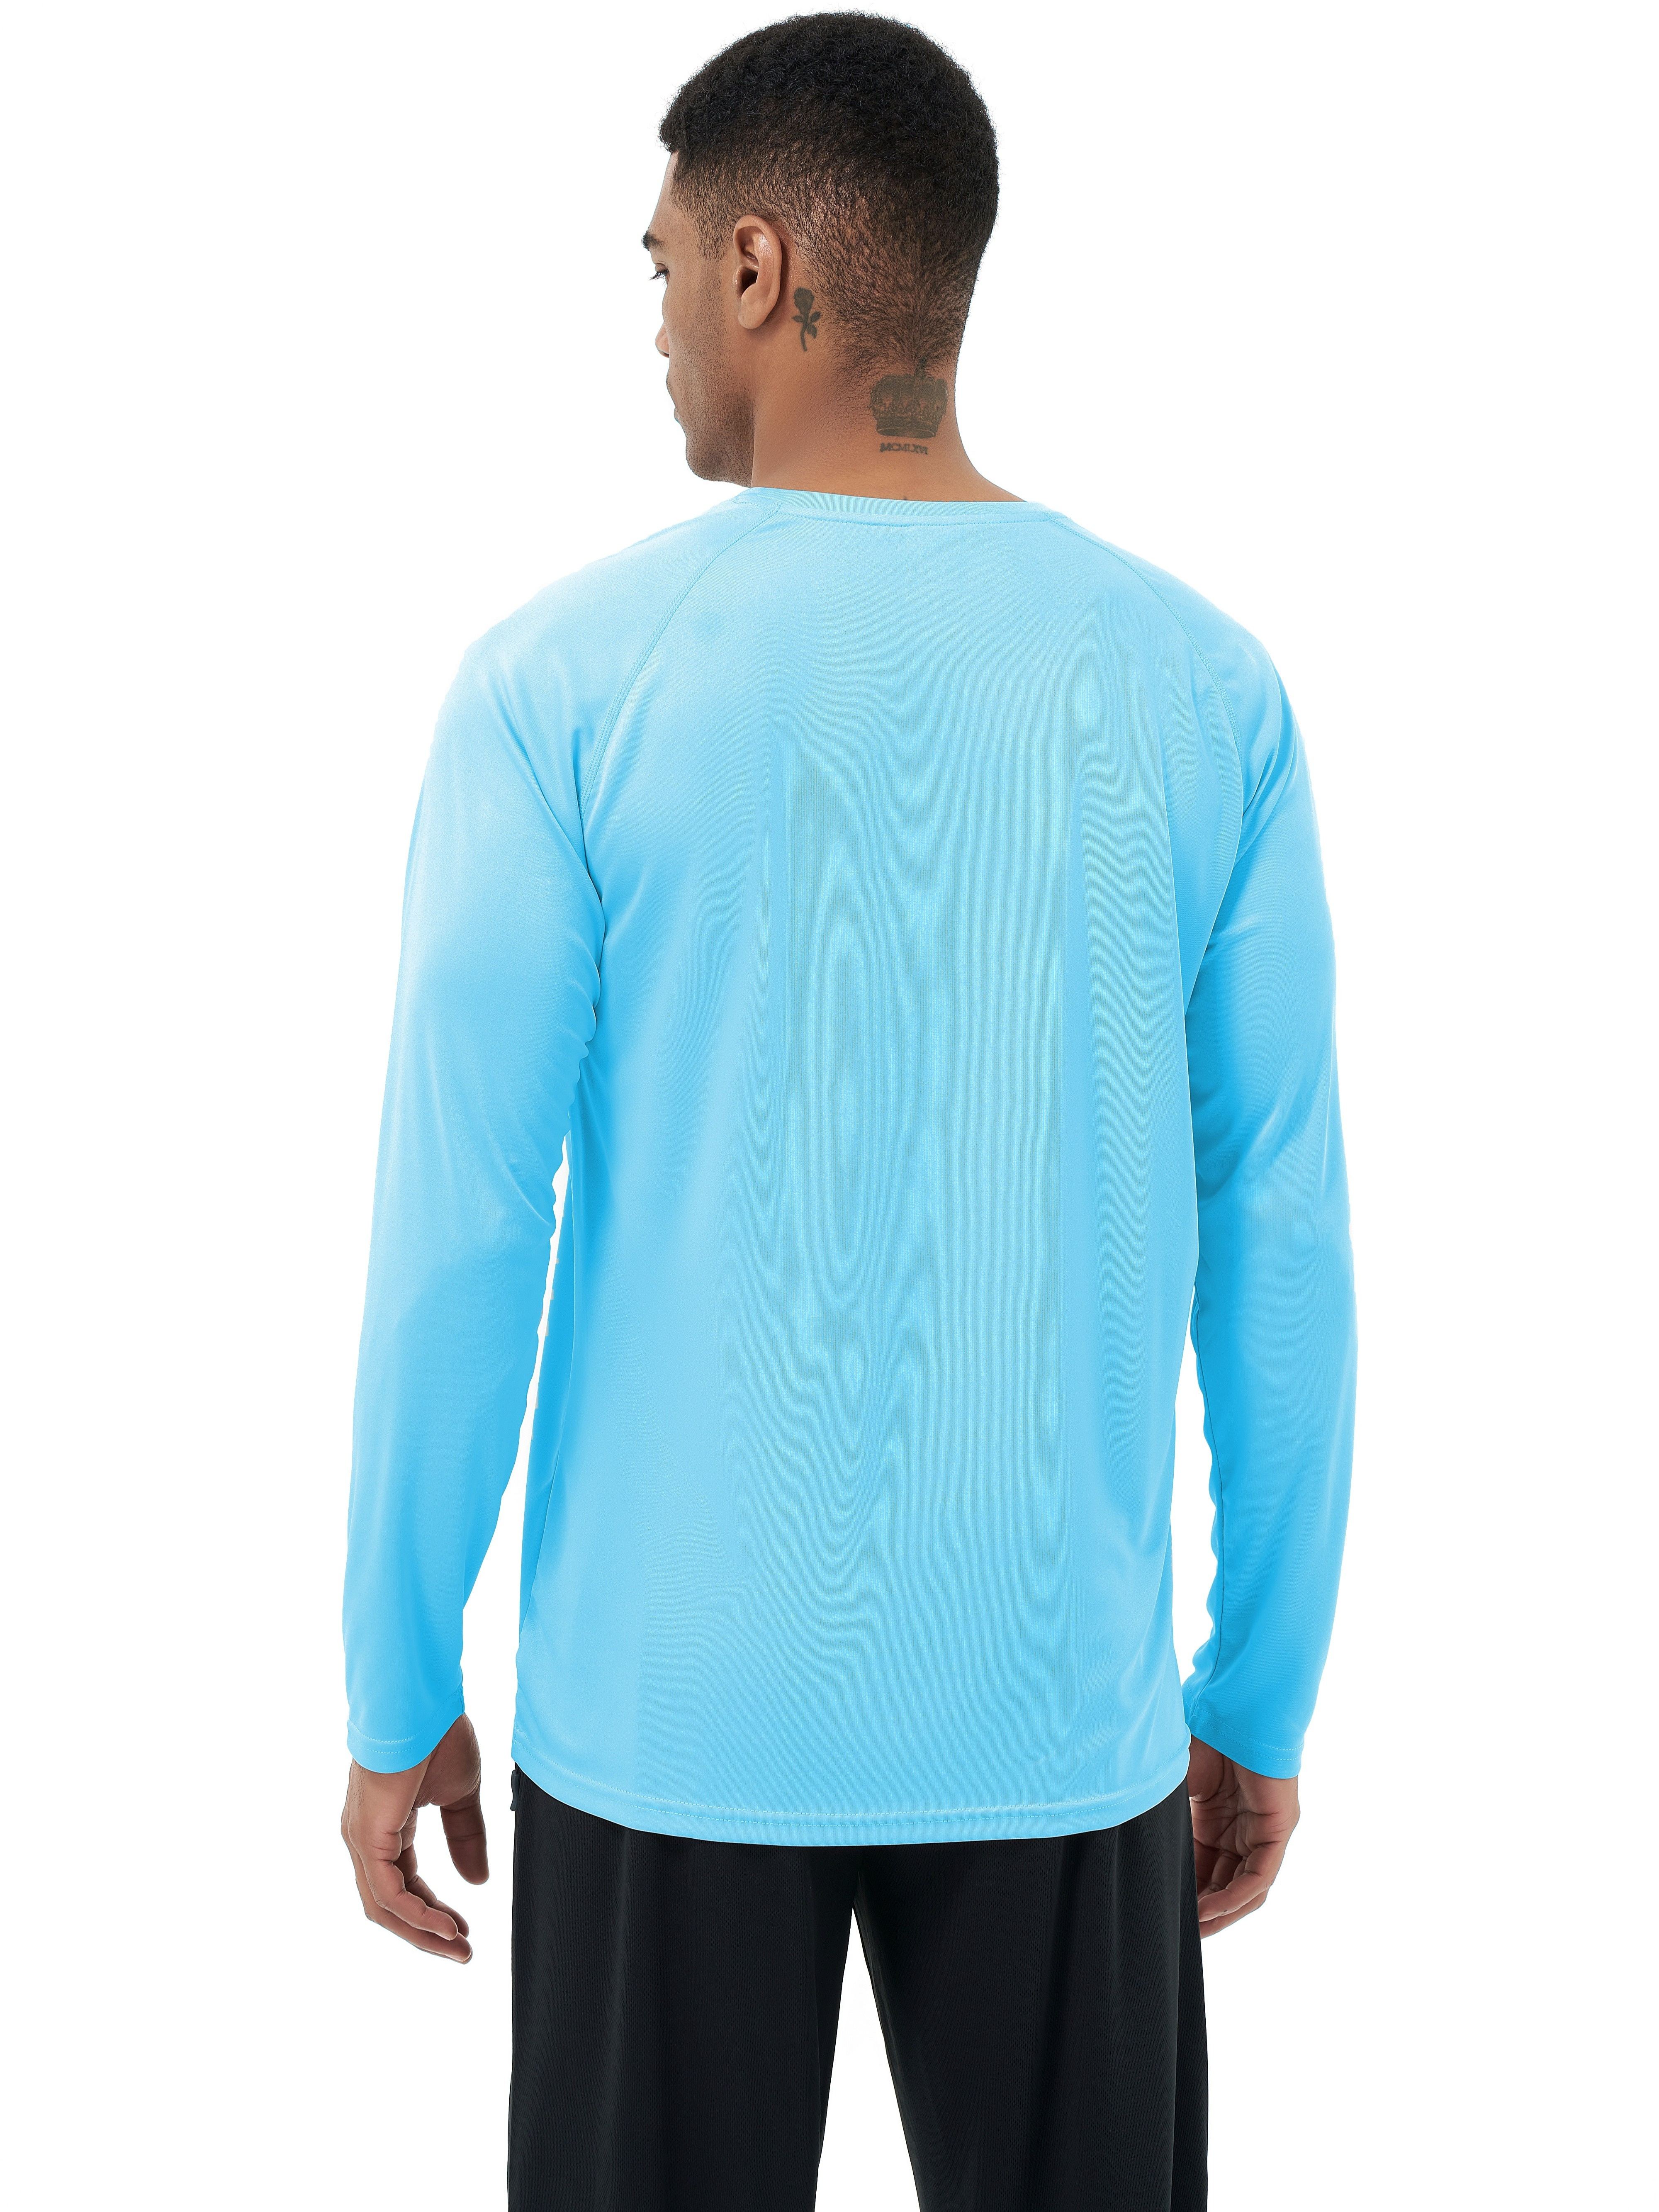 Men's UPF 50+ Sun Protection Shirts Quick Dry UV T-Shirts, Light Sky Blue / L